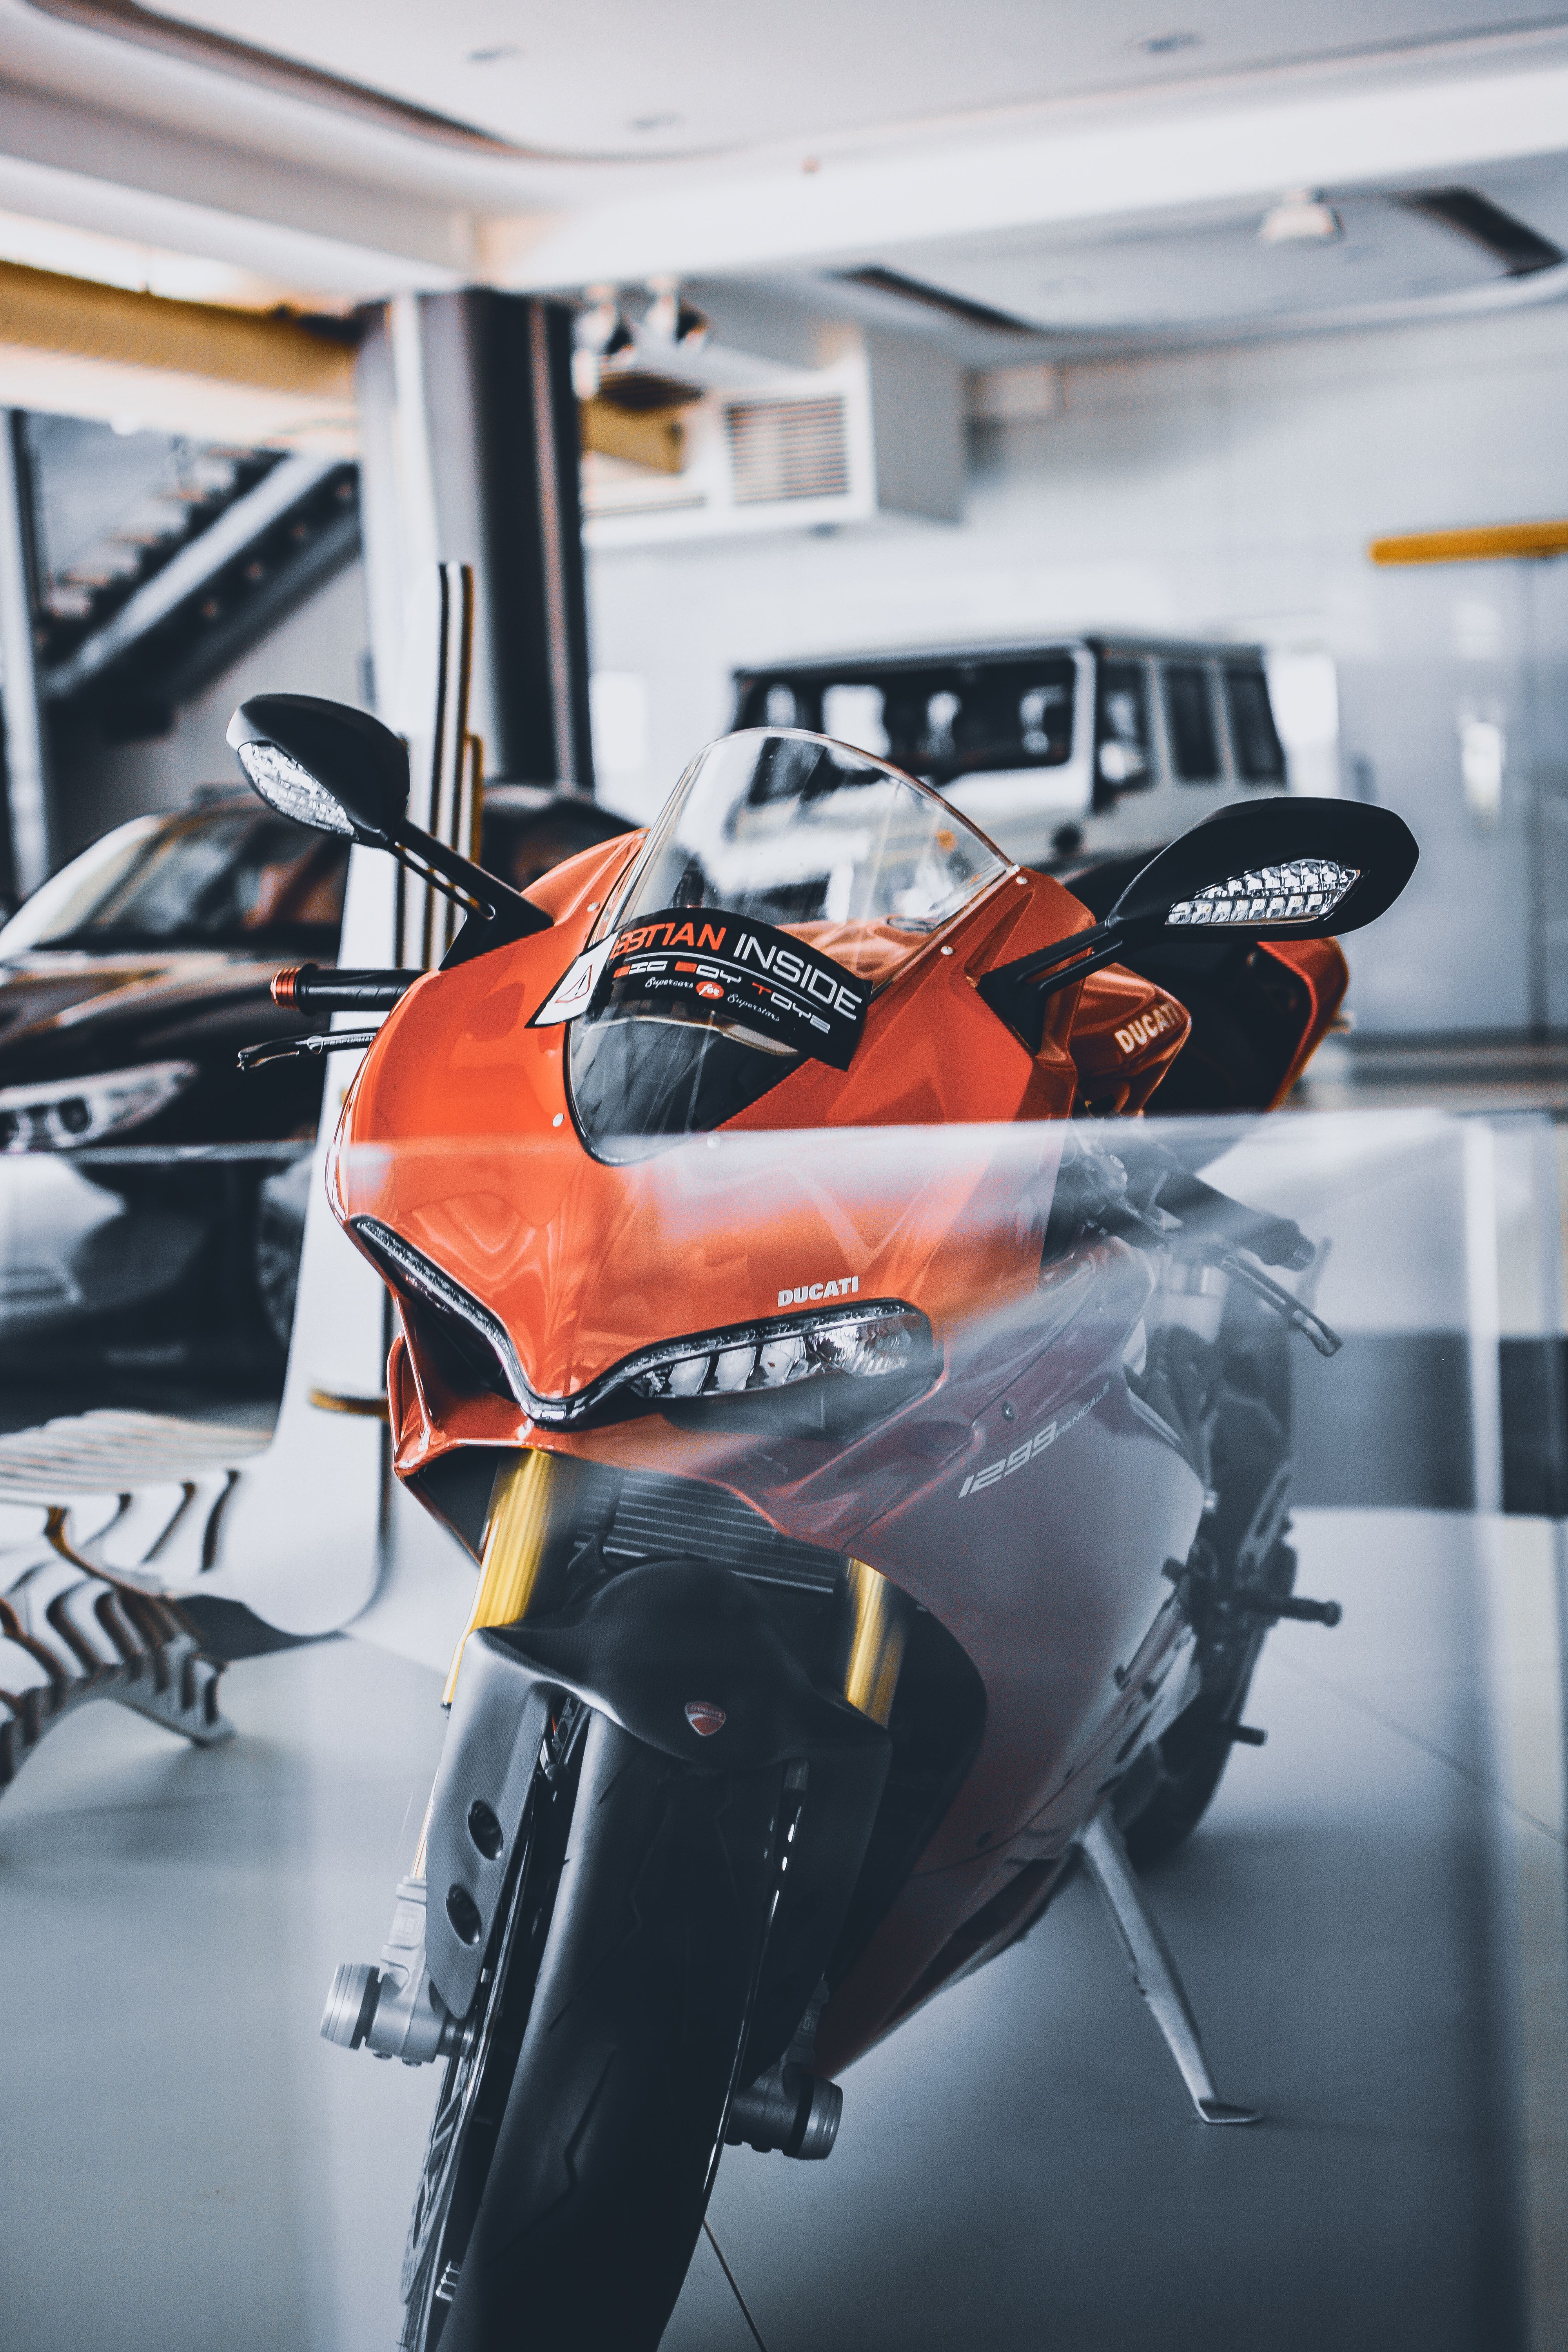 Red and Black Sports Bike Parking Inside Garage · Free